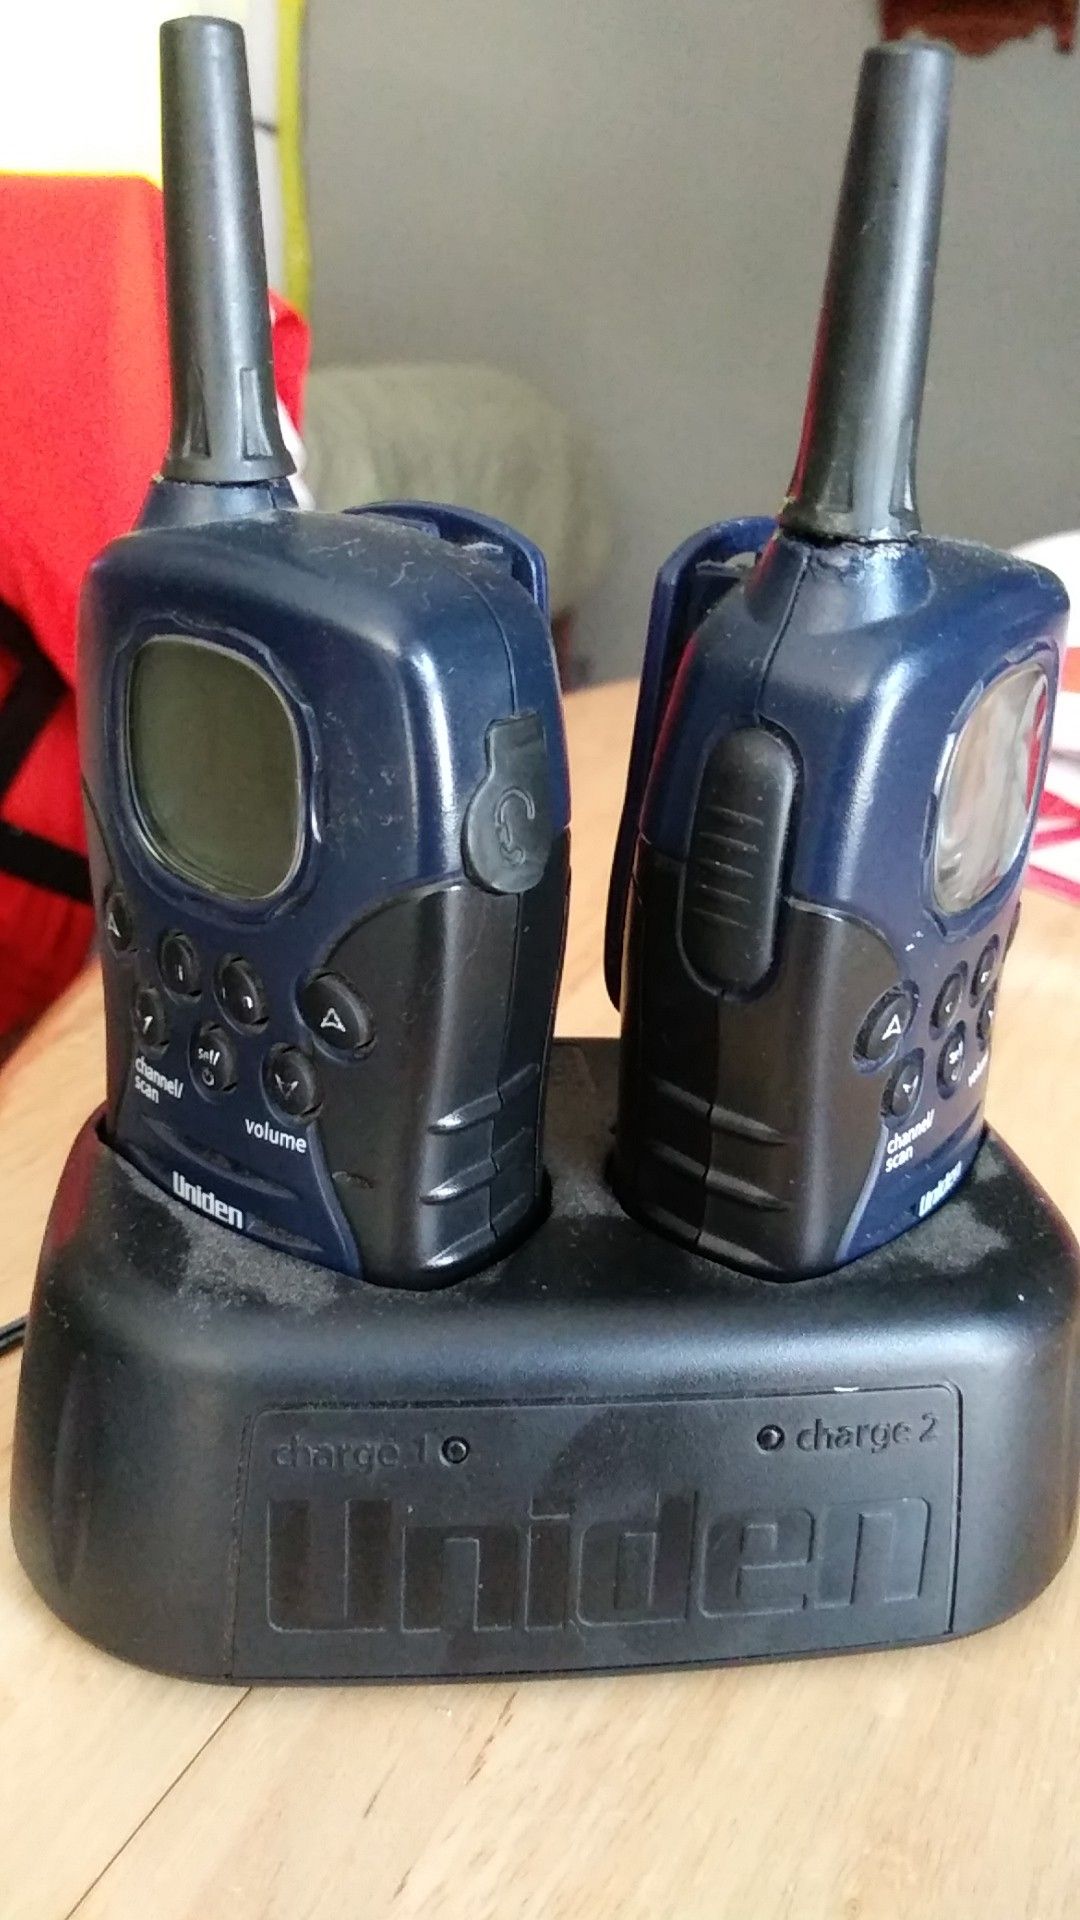 Uniden 5 mile range walkie talkie radios!!